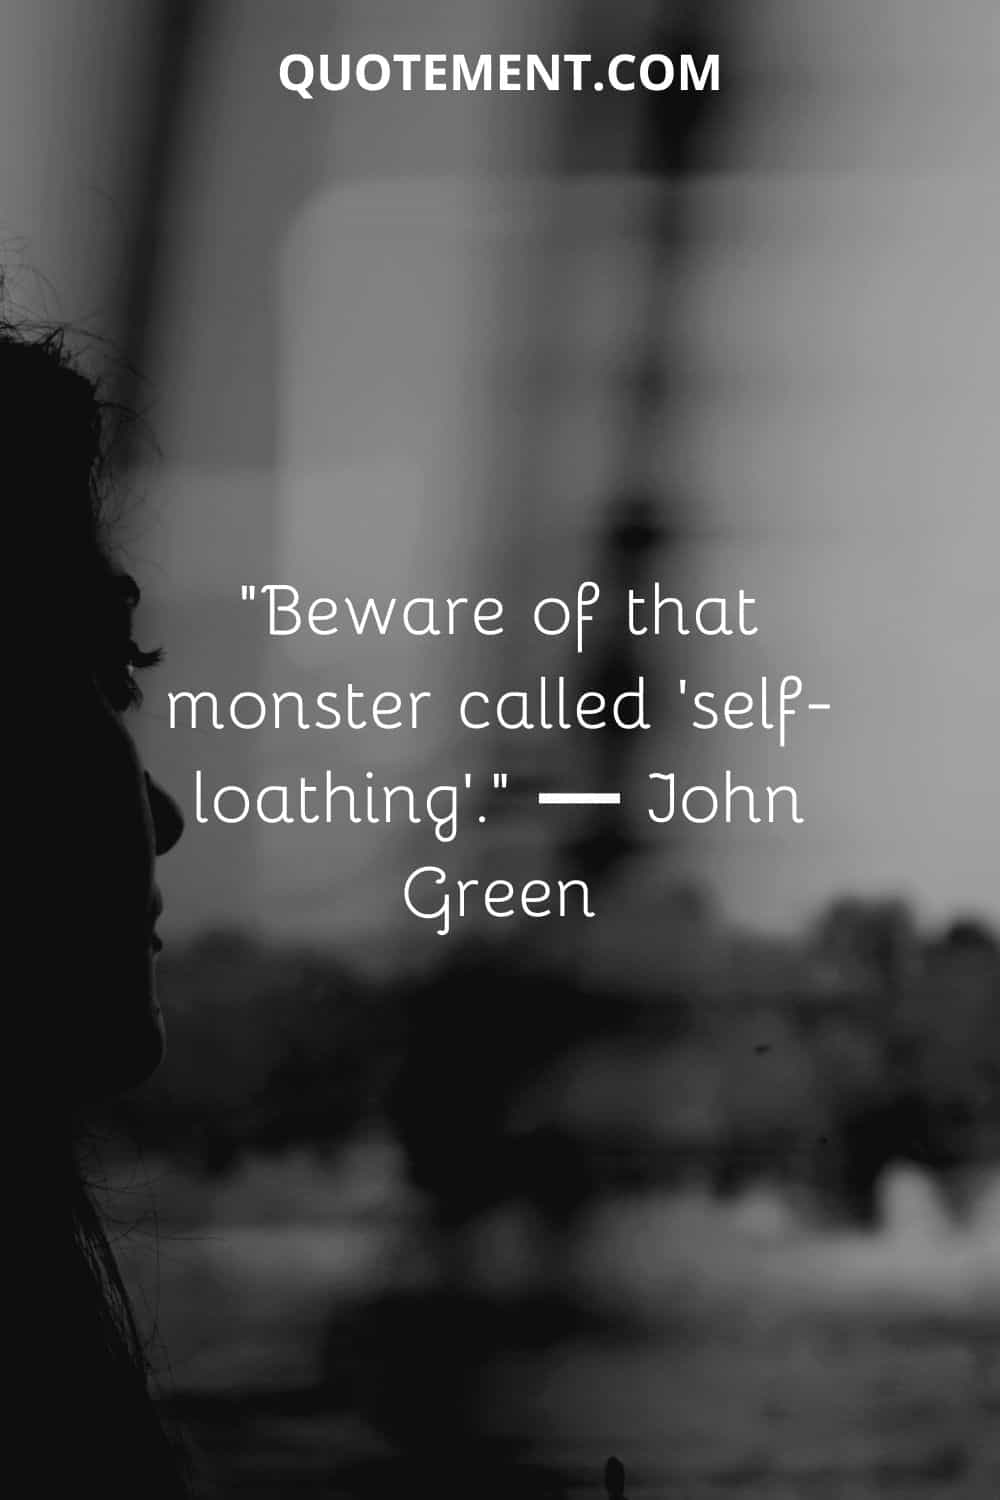 Beware of that monster called 'self-loathing'